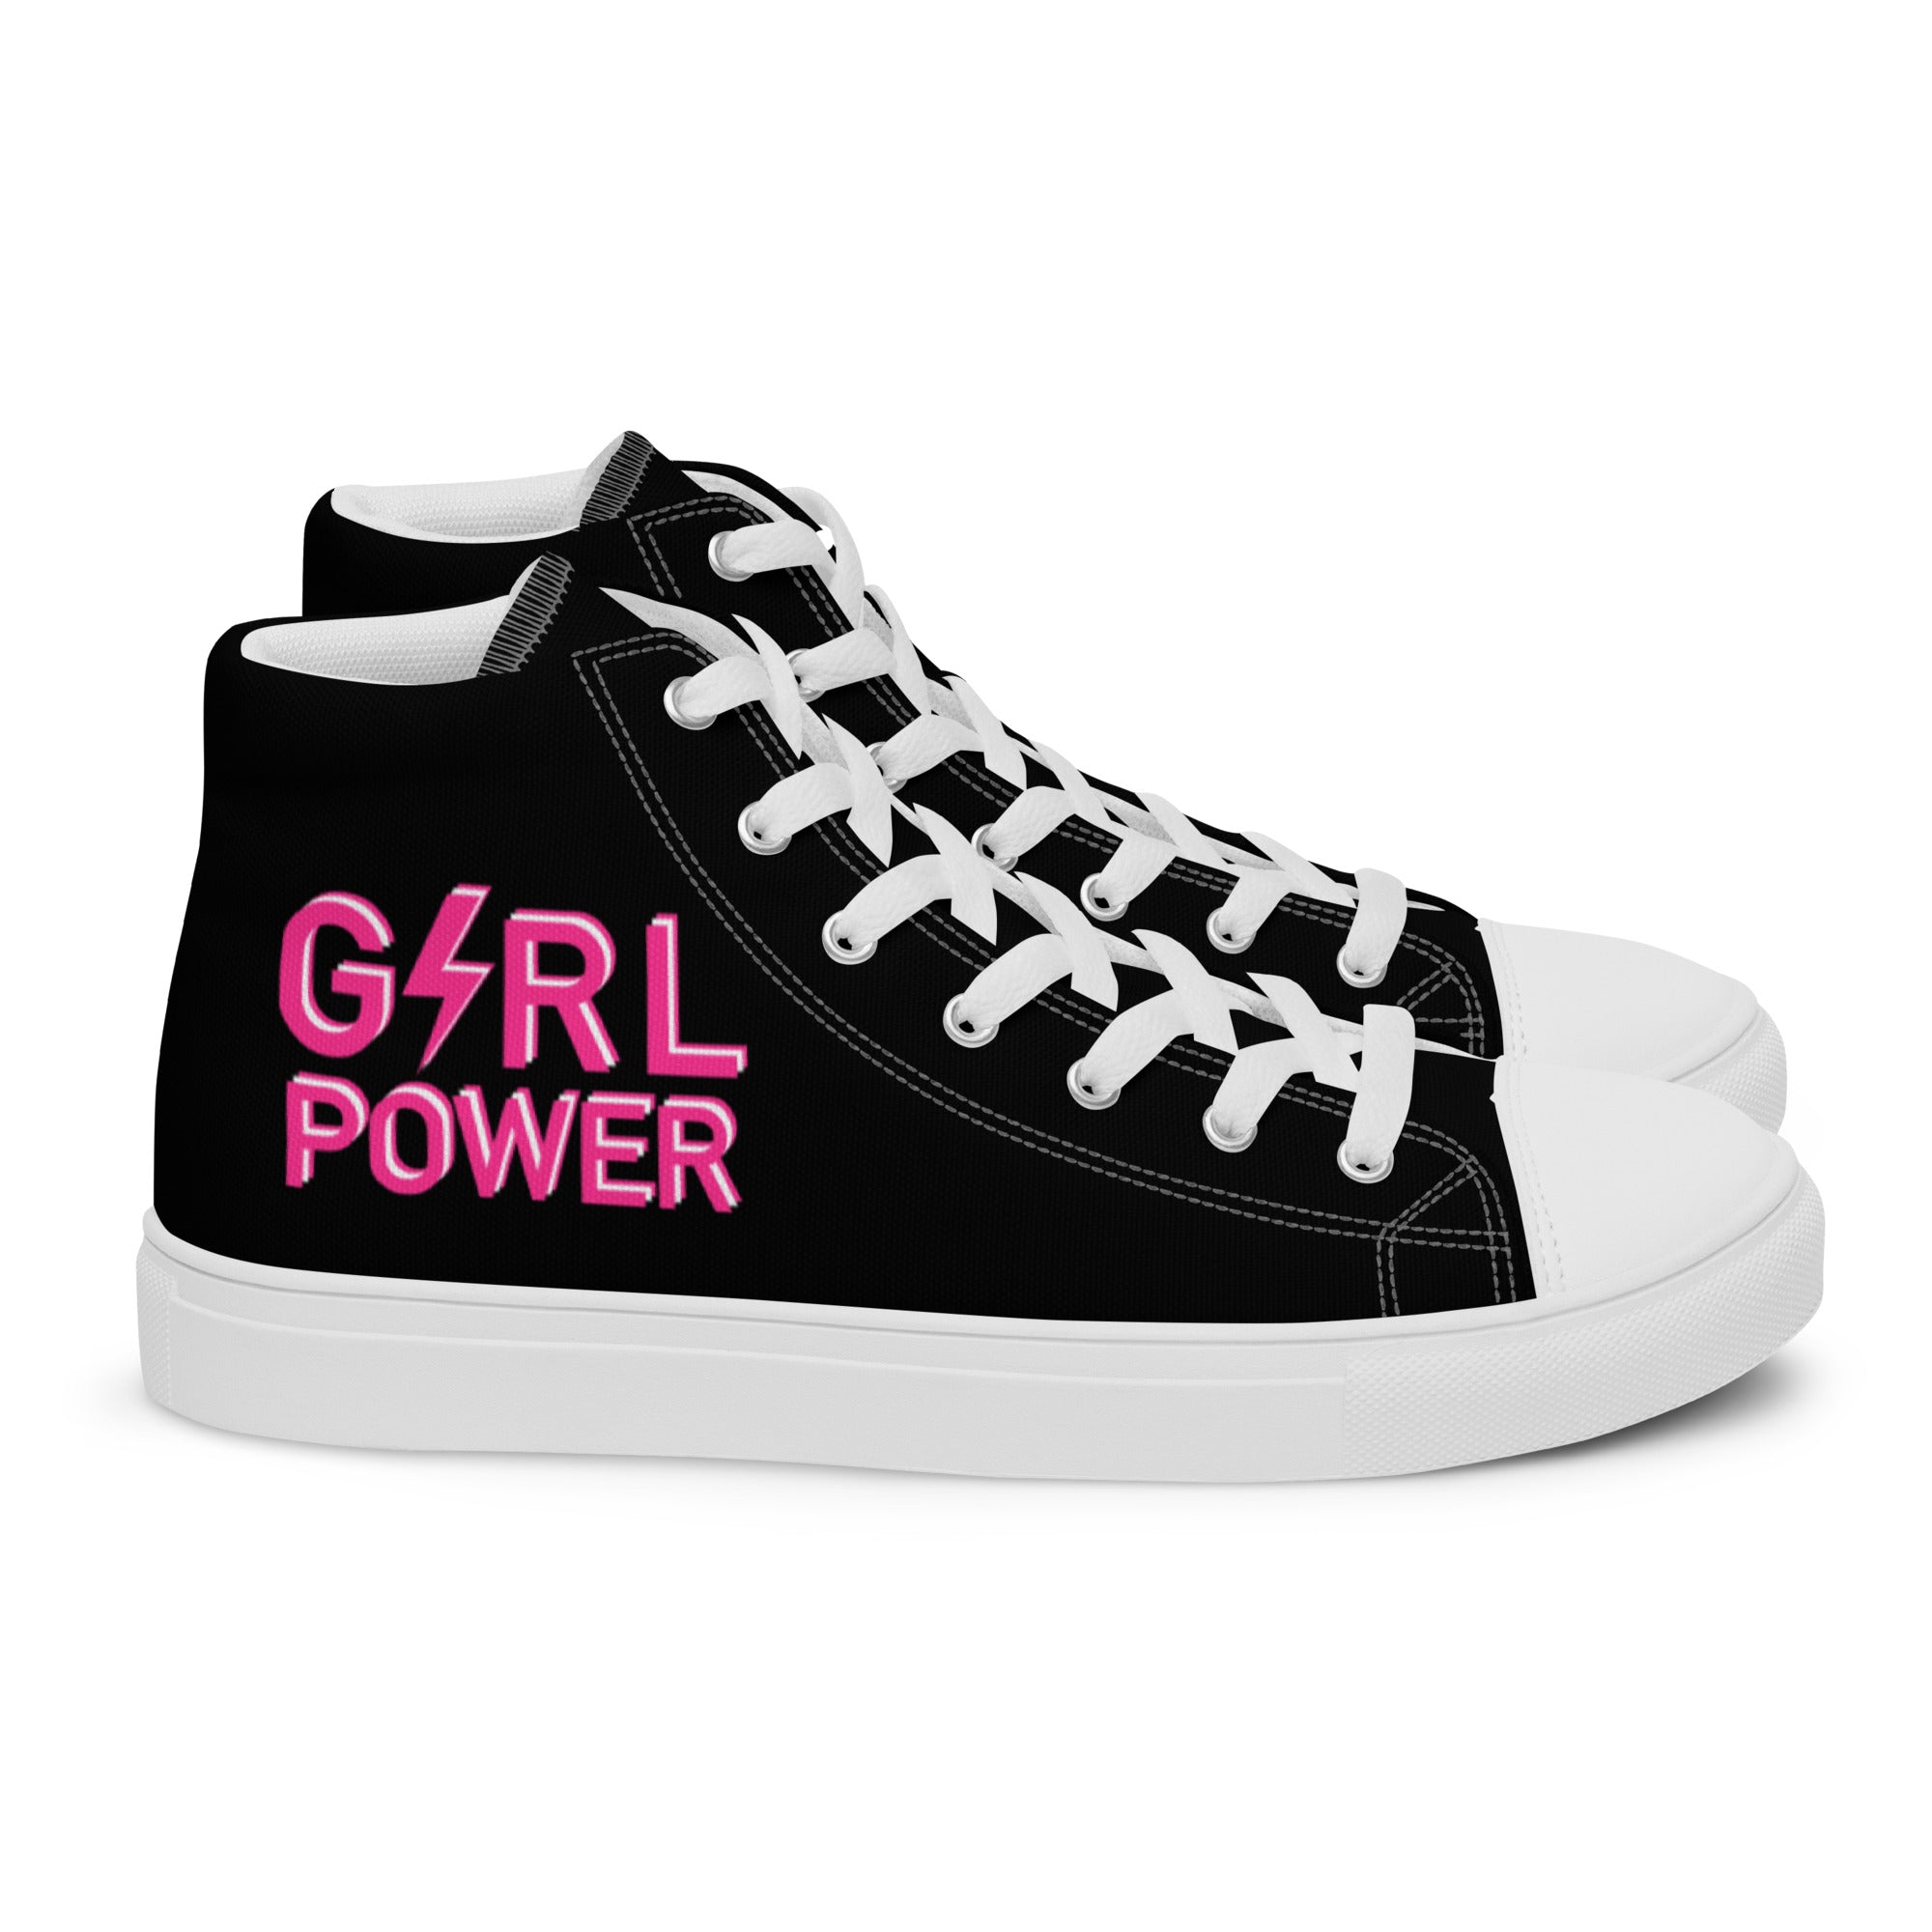 Girl PWR high top canvas shoes - Fuchsia/black